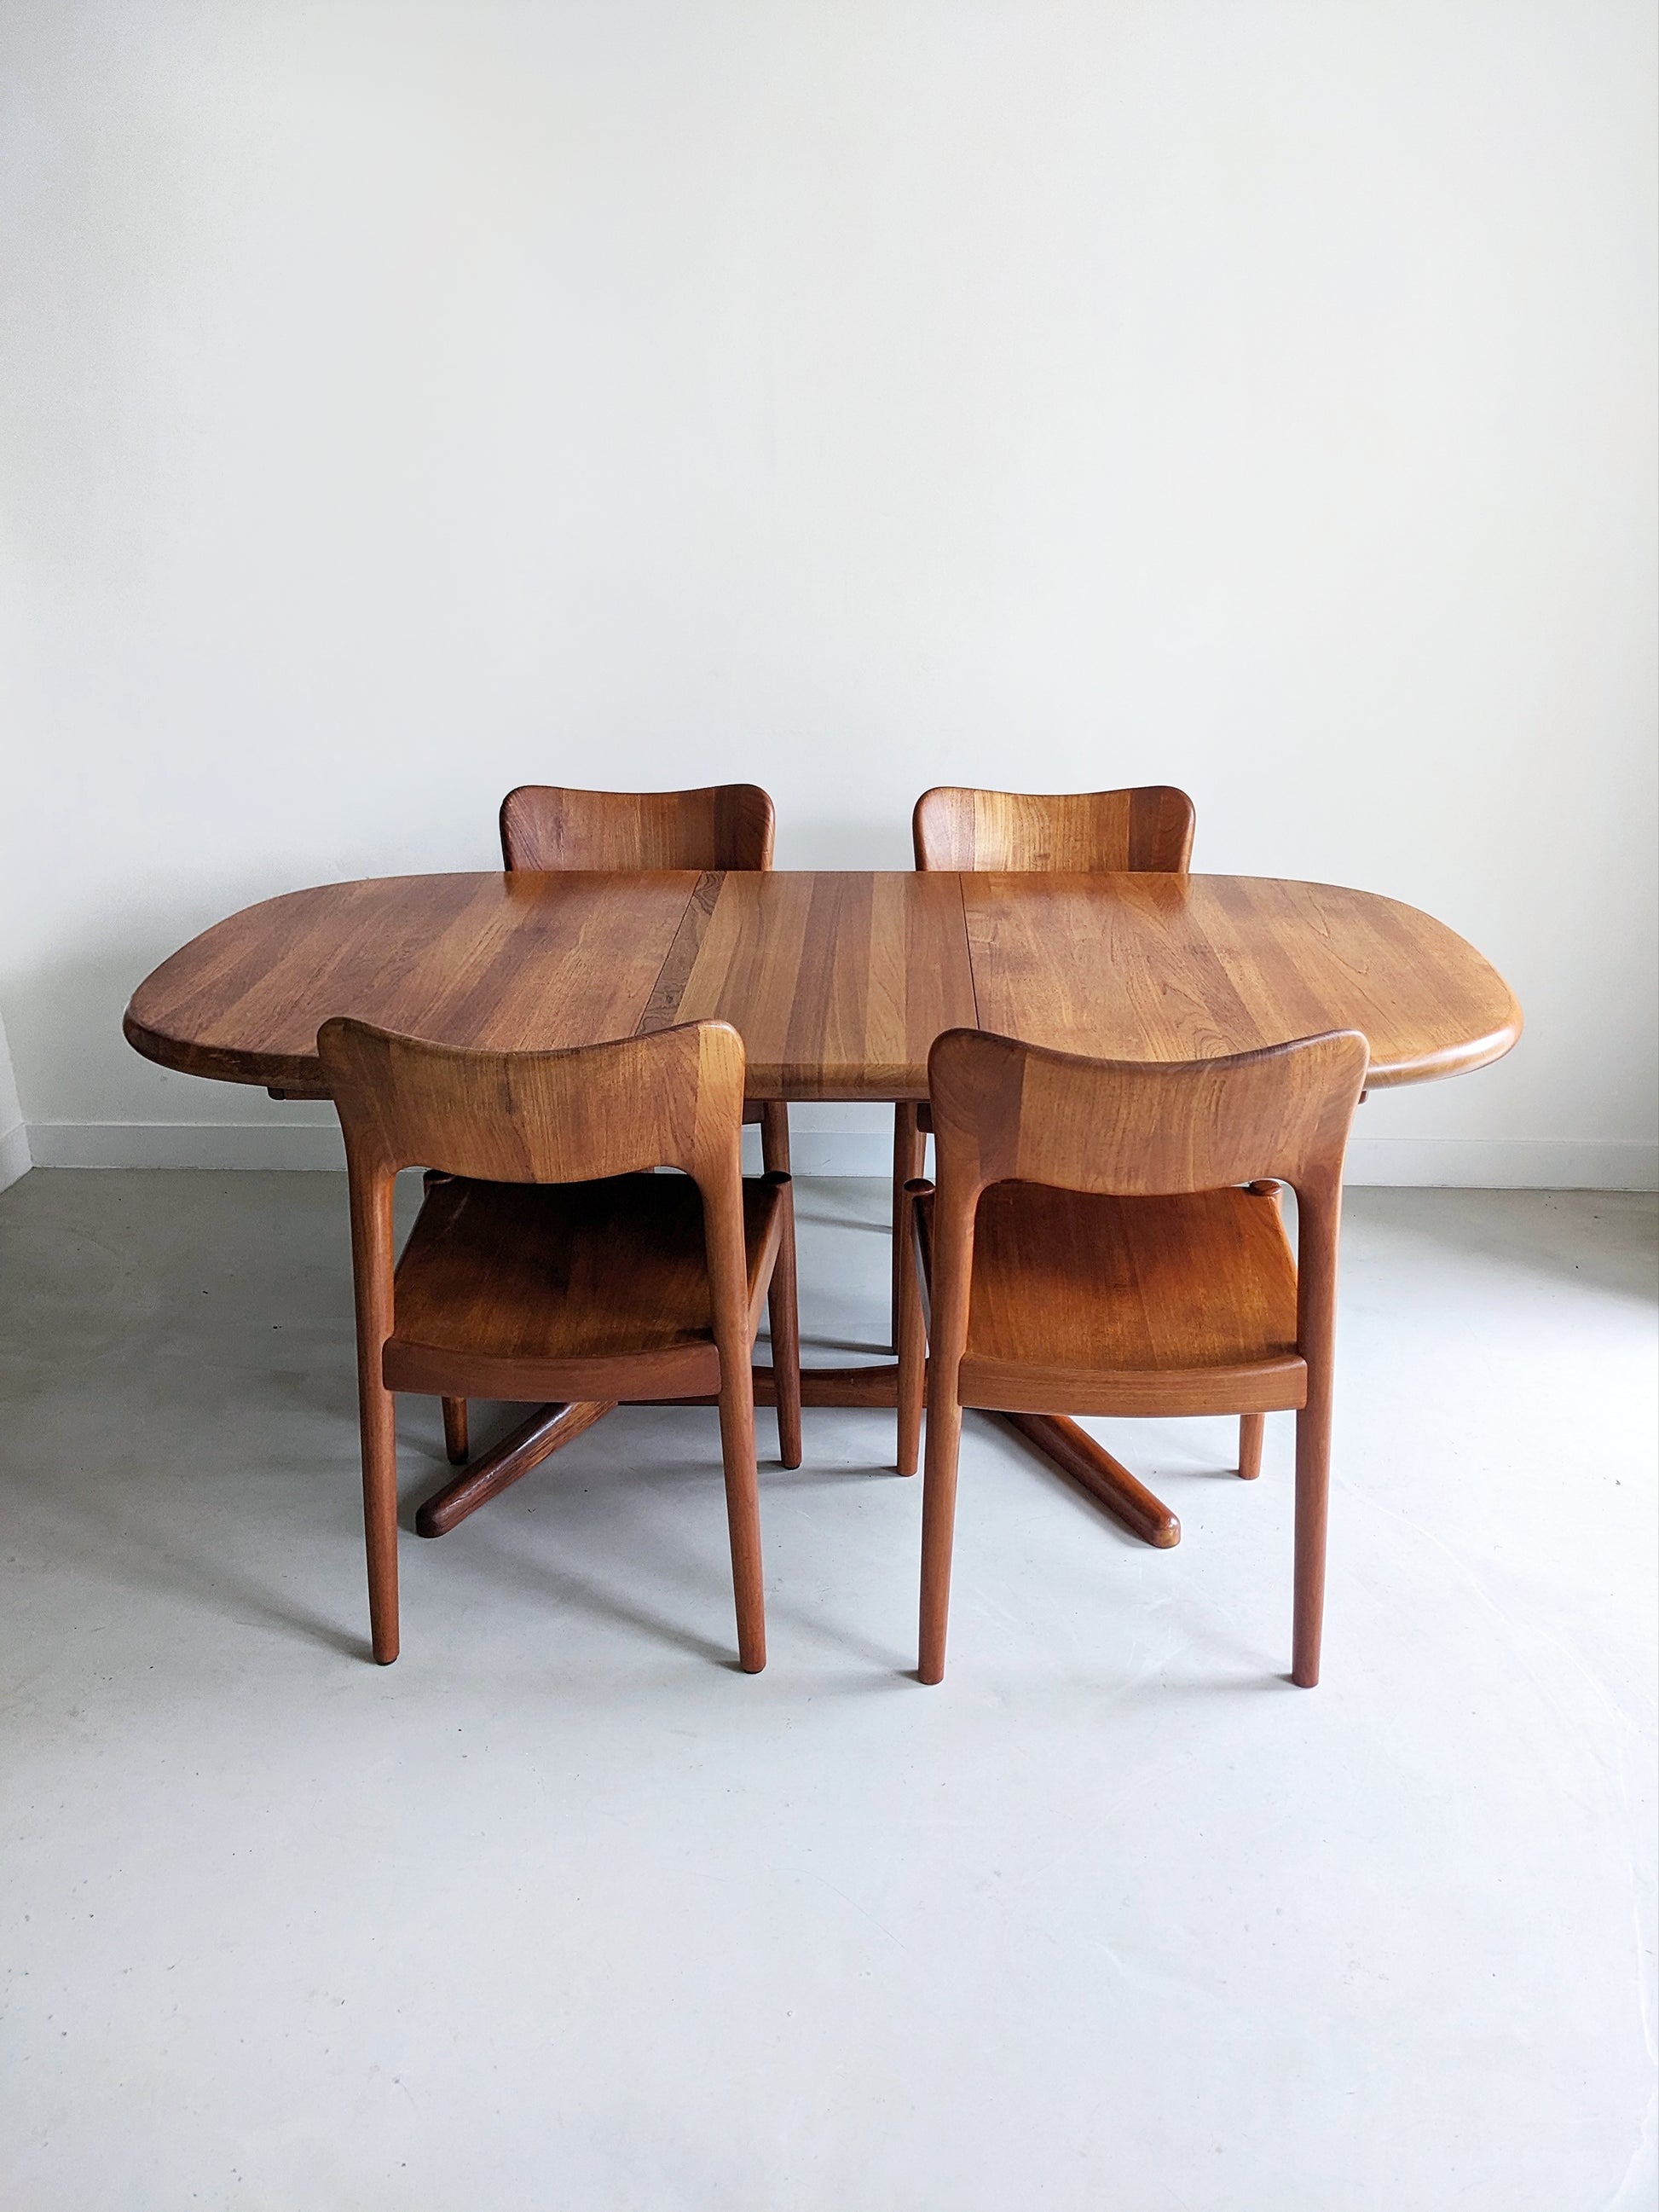 Extendable Dining Table by Juul Kristensen for Glostrup Møbelfabrik 1960's. Danish scandinavian midcentury modern design. Teak. Sixties